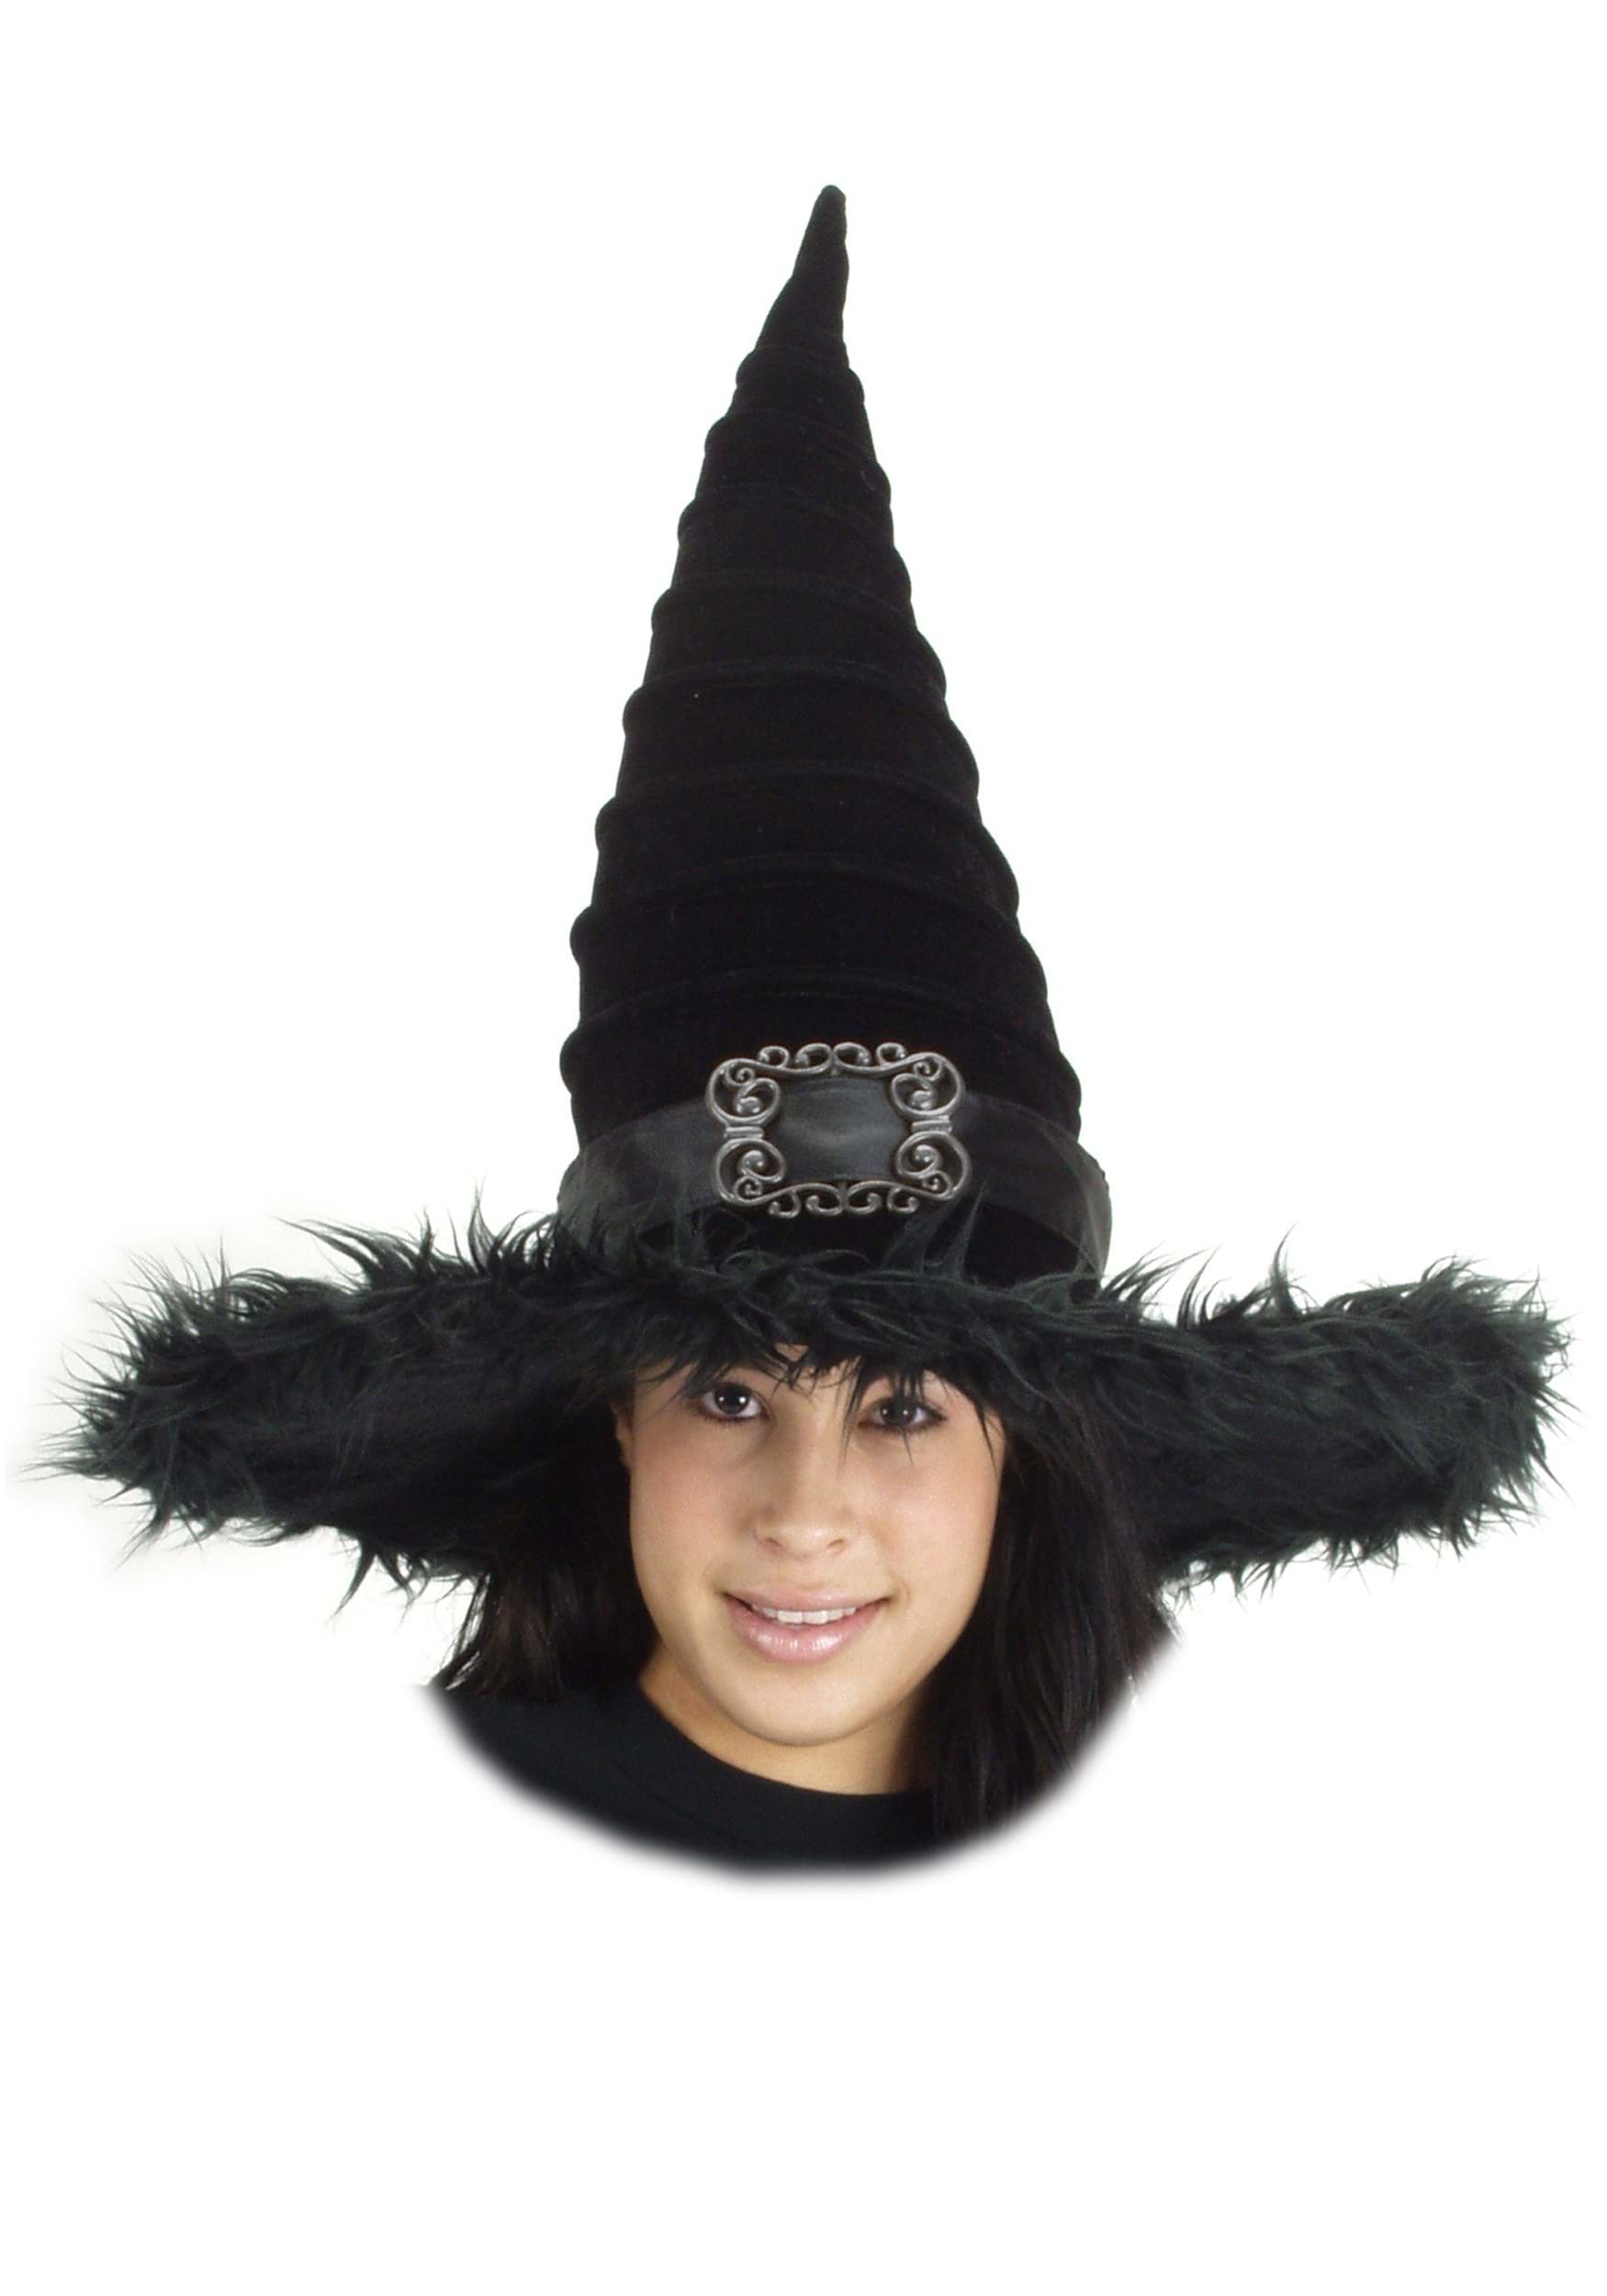 Black Ridged Witch Fancy Dress Costume Hat